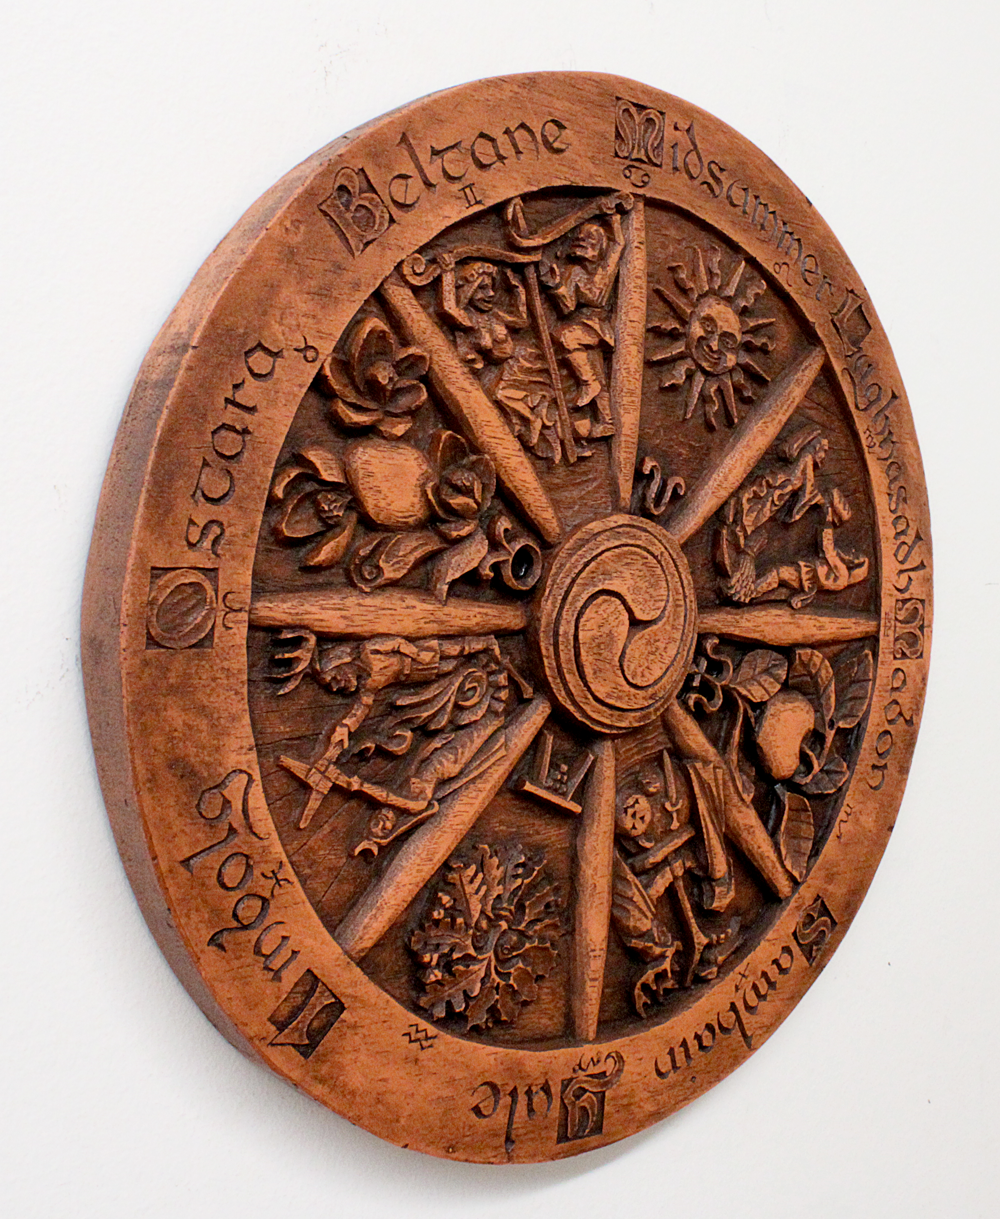 Large Wheel of the Year Plaque - Wood Finish - Wicca Pagan Sabbats Wall Decor Без бренда - фотография #4